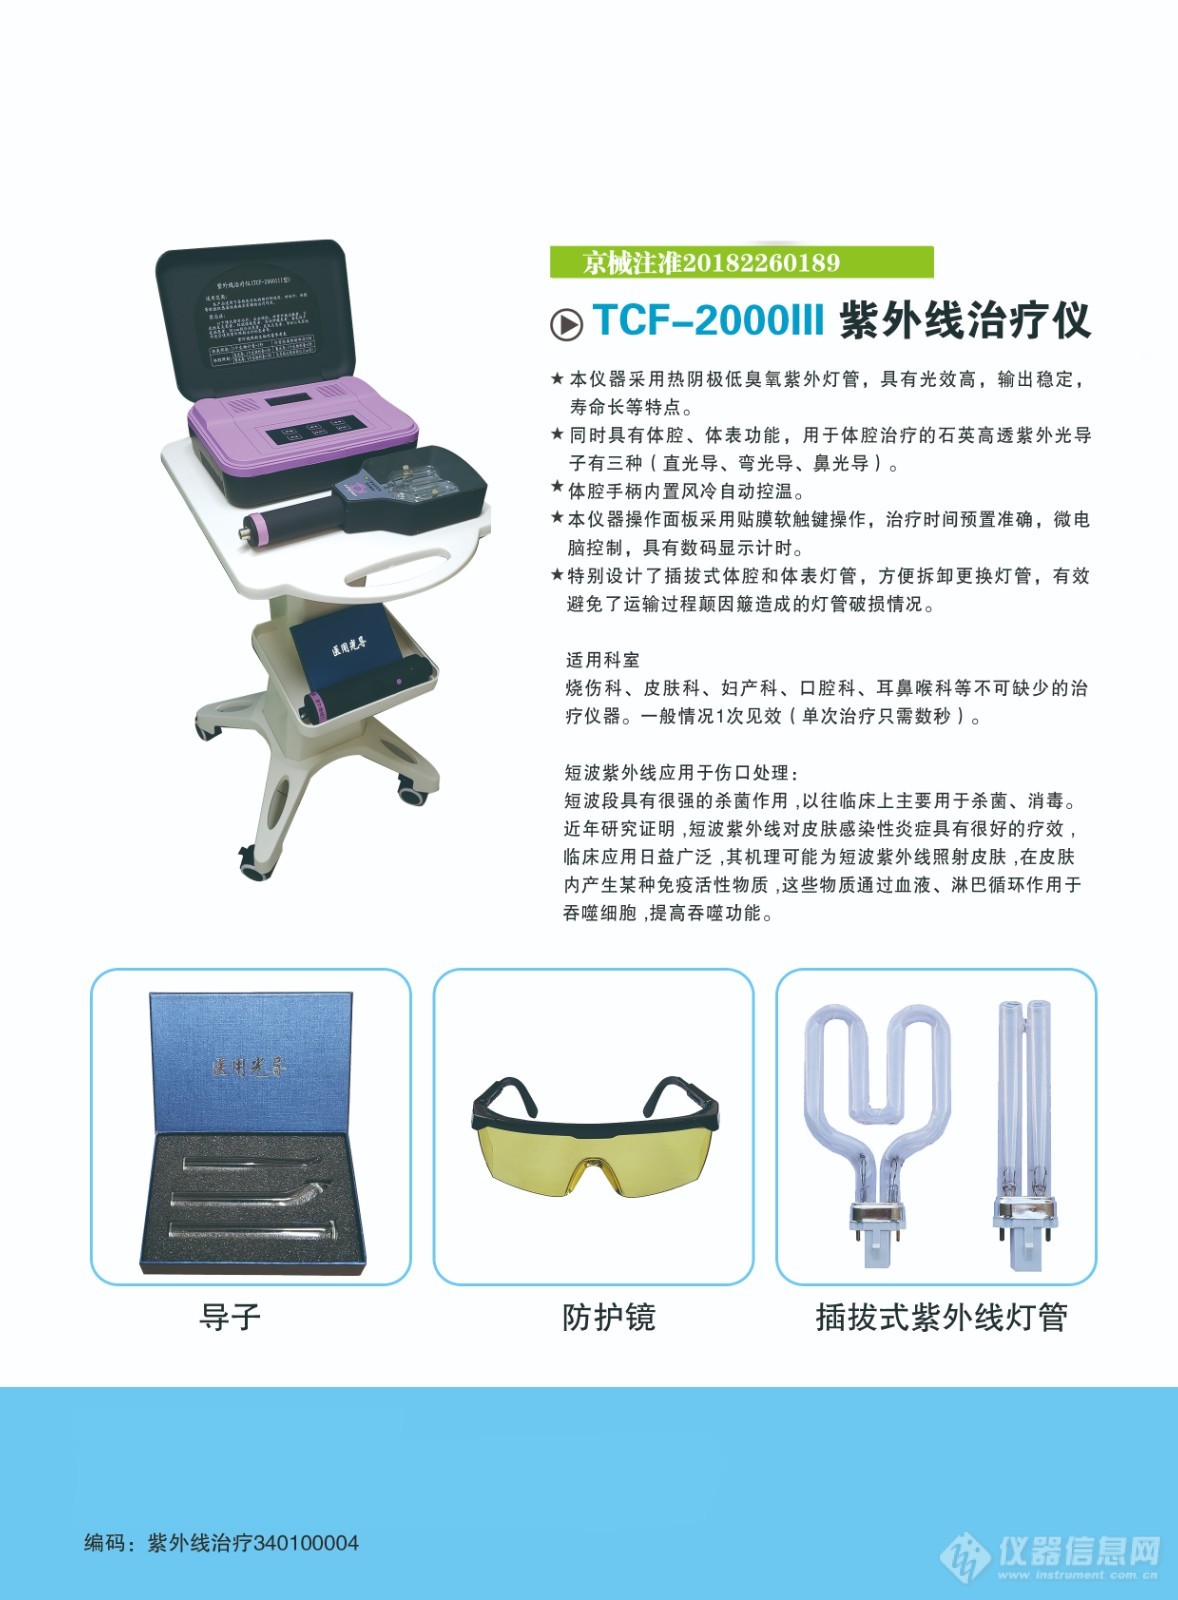 TCF-2000III型紫外线治疗仪.jpg